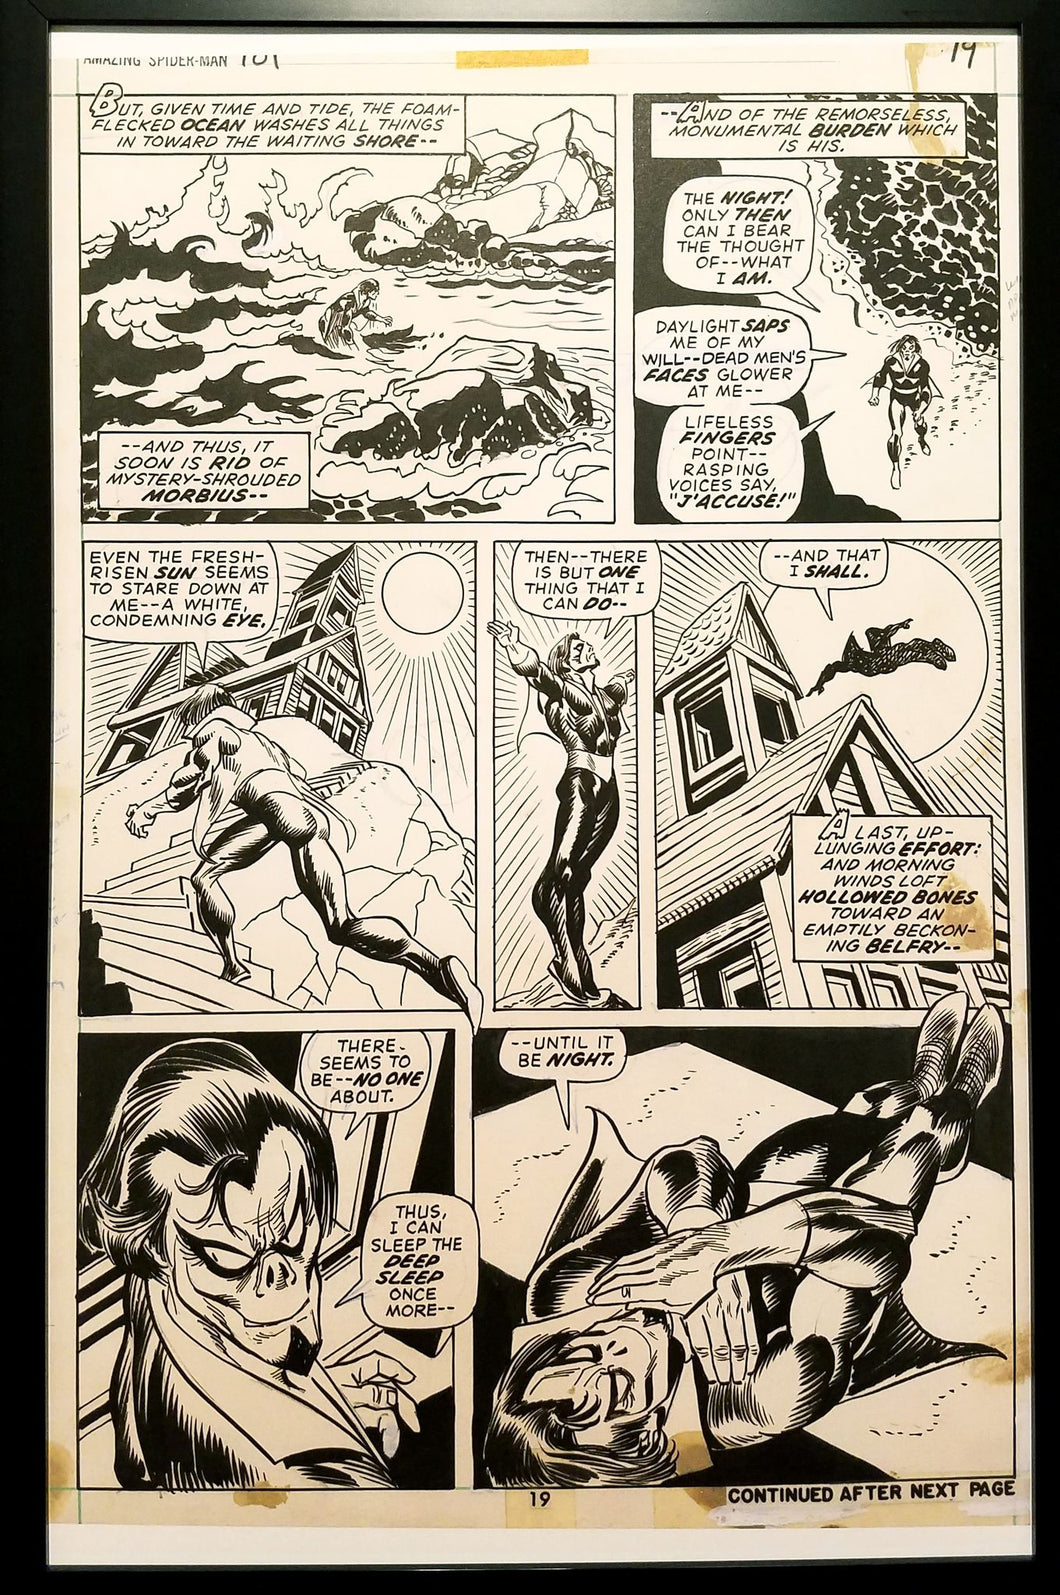 Amazing Spider-Man #101 pg. 19 Gil Kane 11x17 FRAMED Original Art Poster Marvel Comics Poster